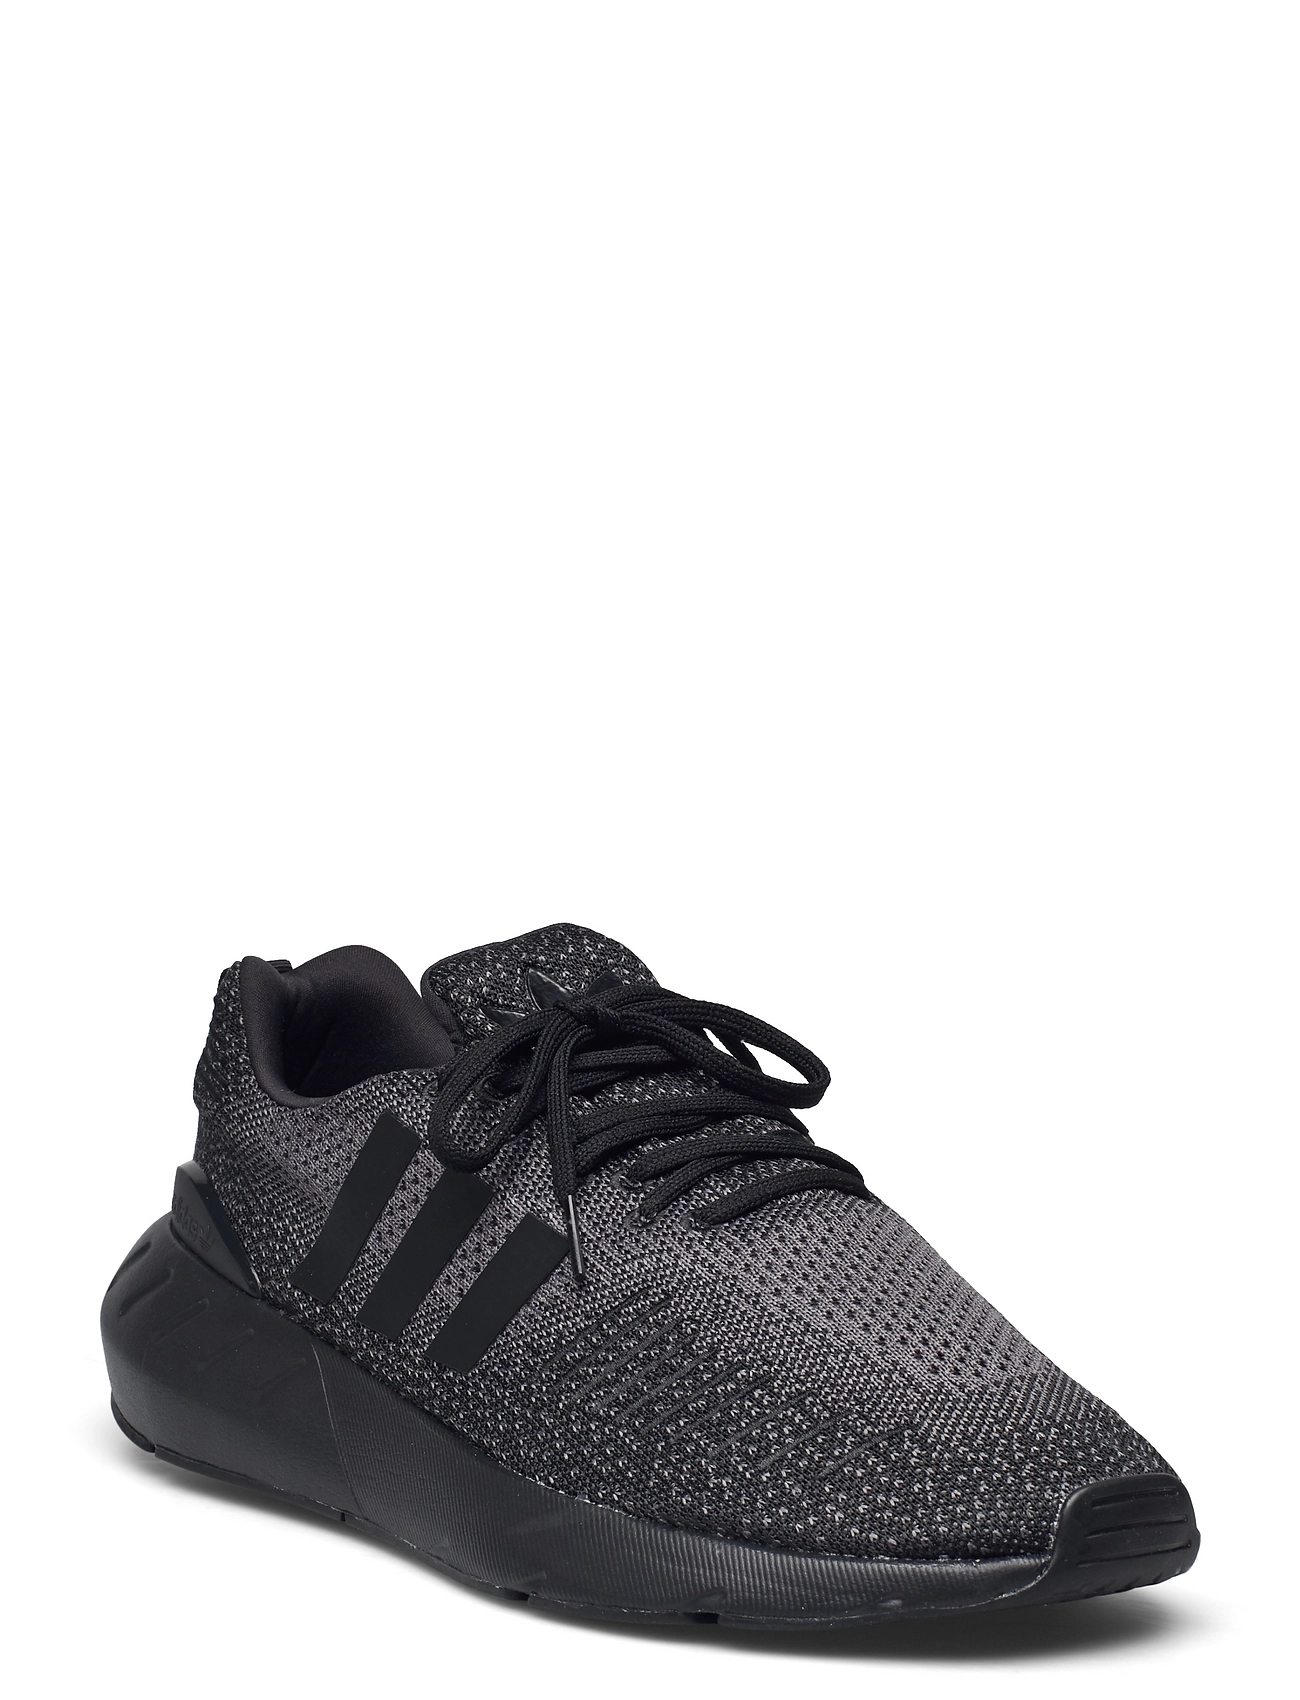 "adidas Originals" "Swift Run 22 Shoes Low-top Sneakers Black Adidas